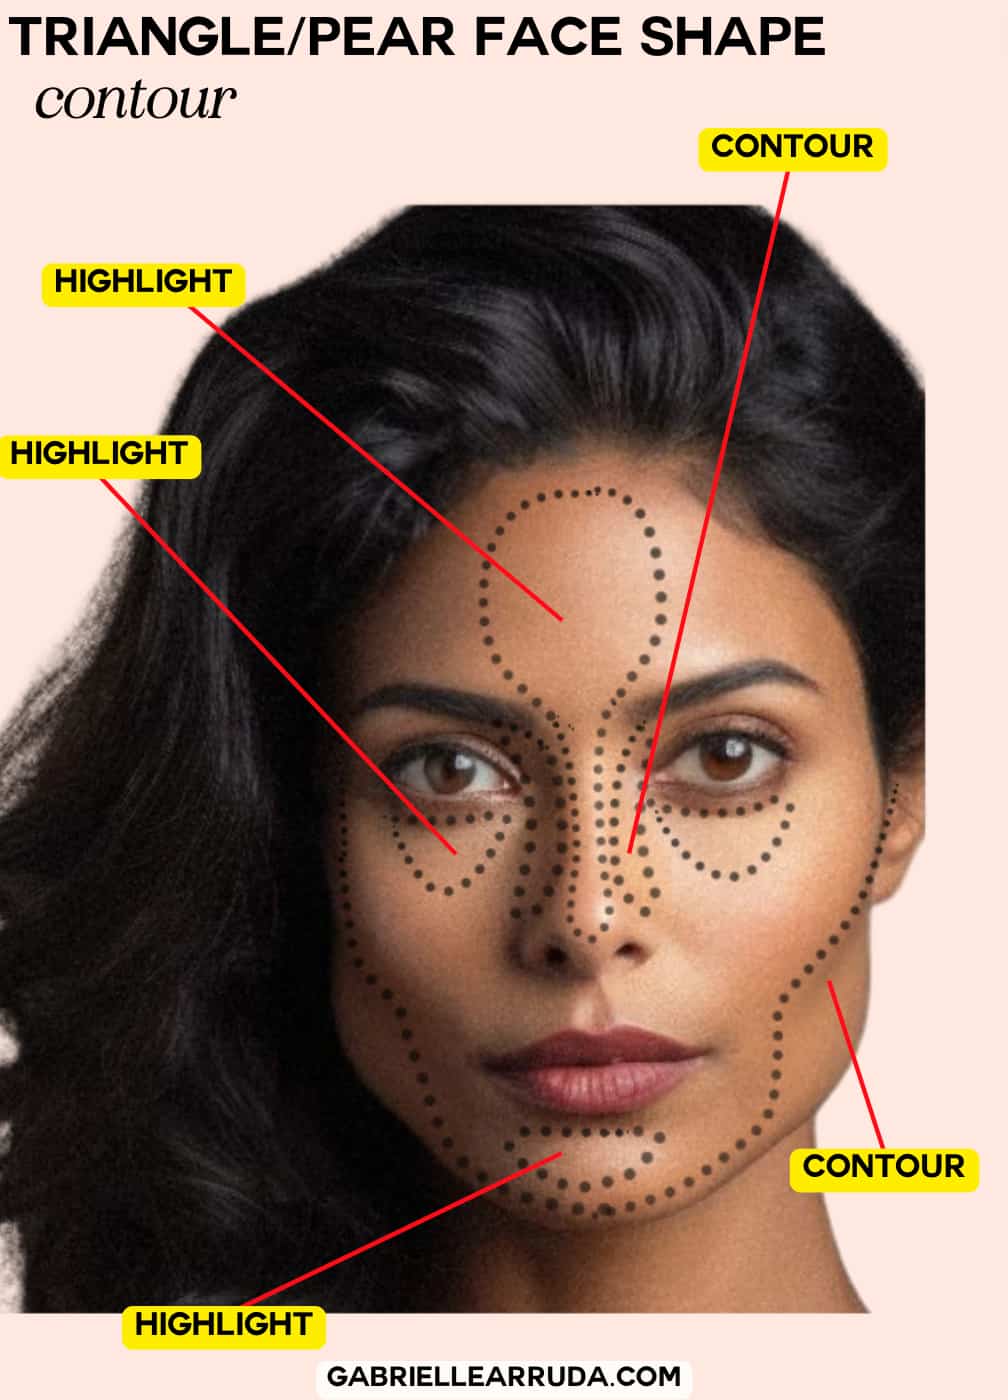 triangle/pear face shape makeup contour